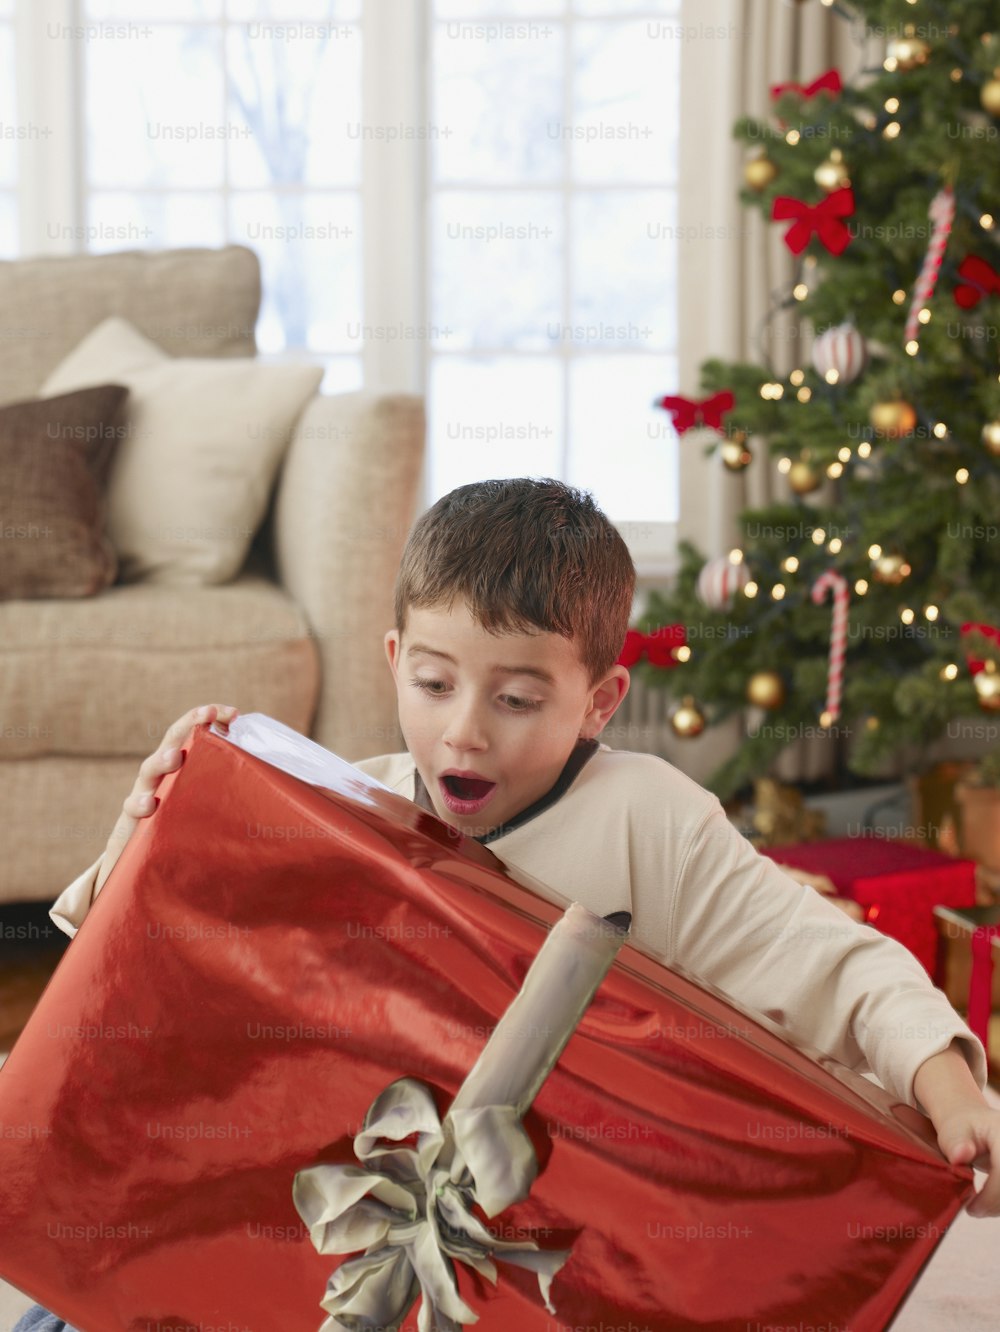 Un jeune garçon ouvrant un cadeau de Noël devant un sapin de Noël